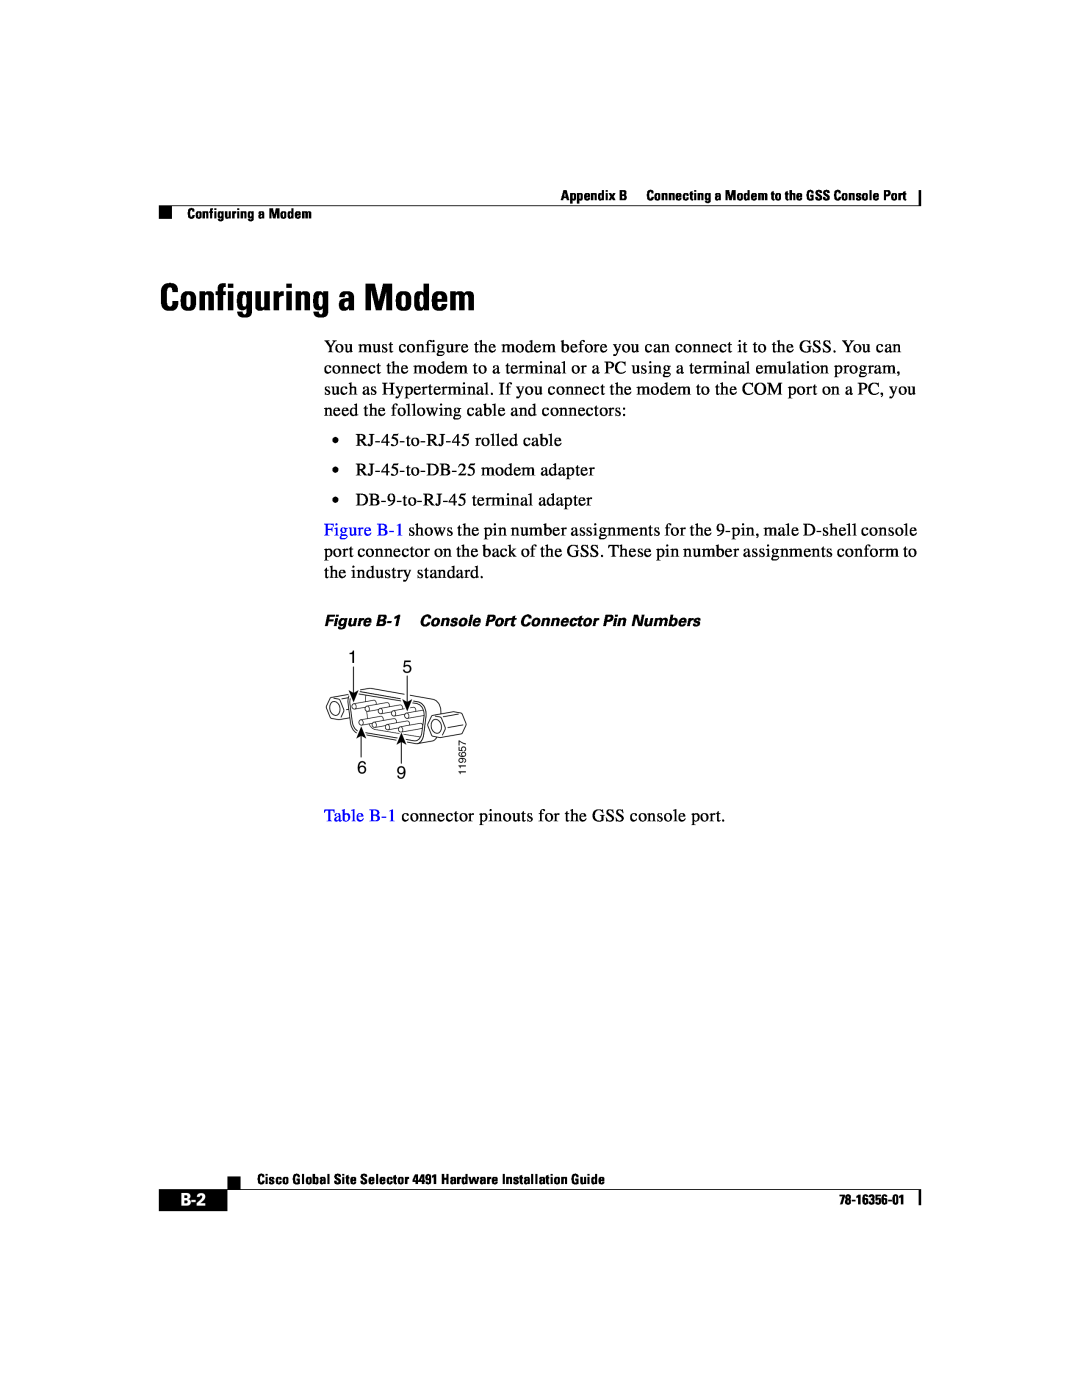 Cisco Systems 78-16356-01 manual Configuring a Modem 